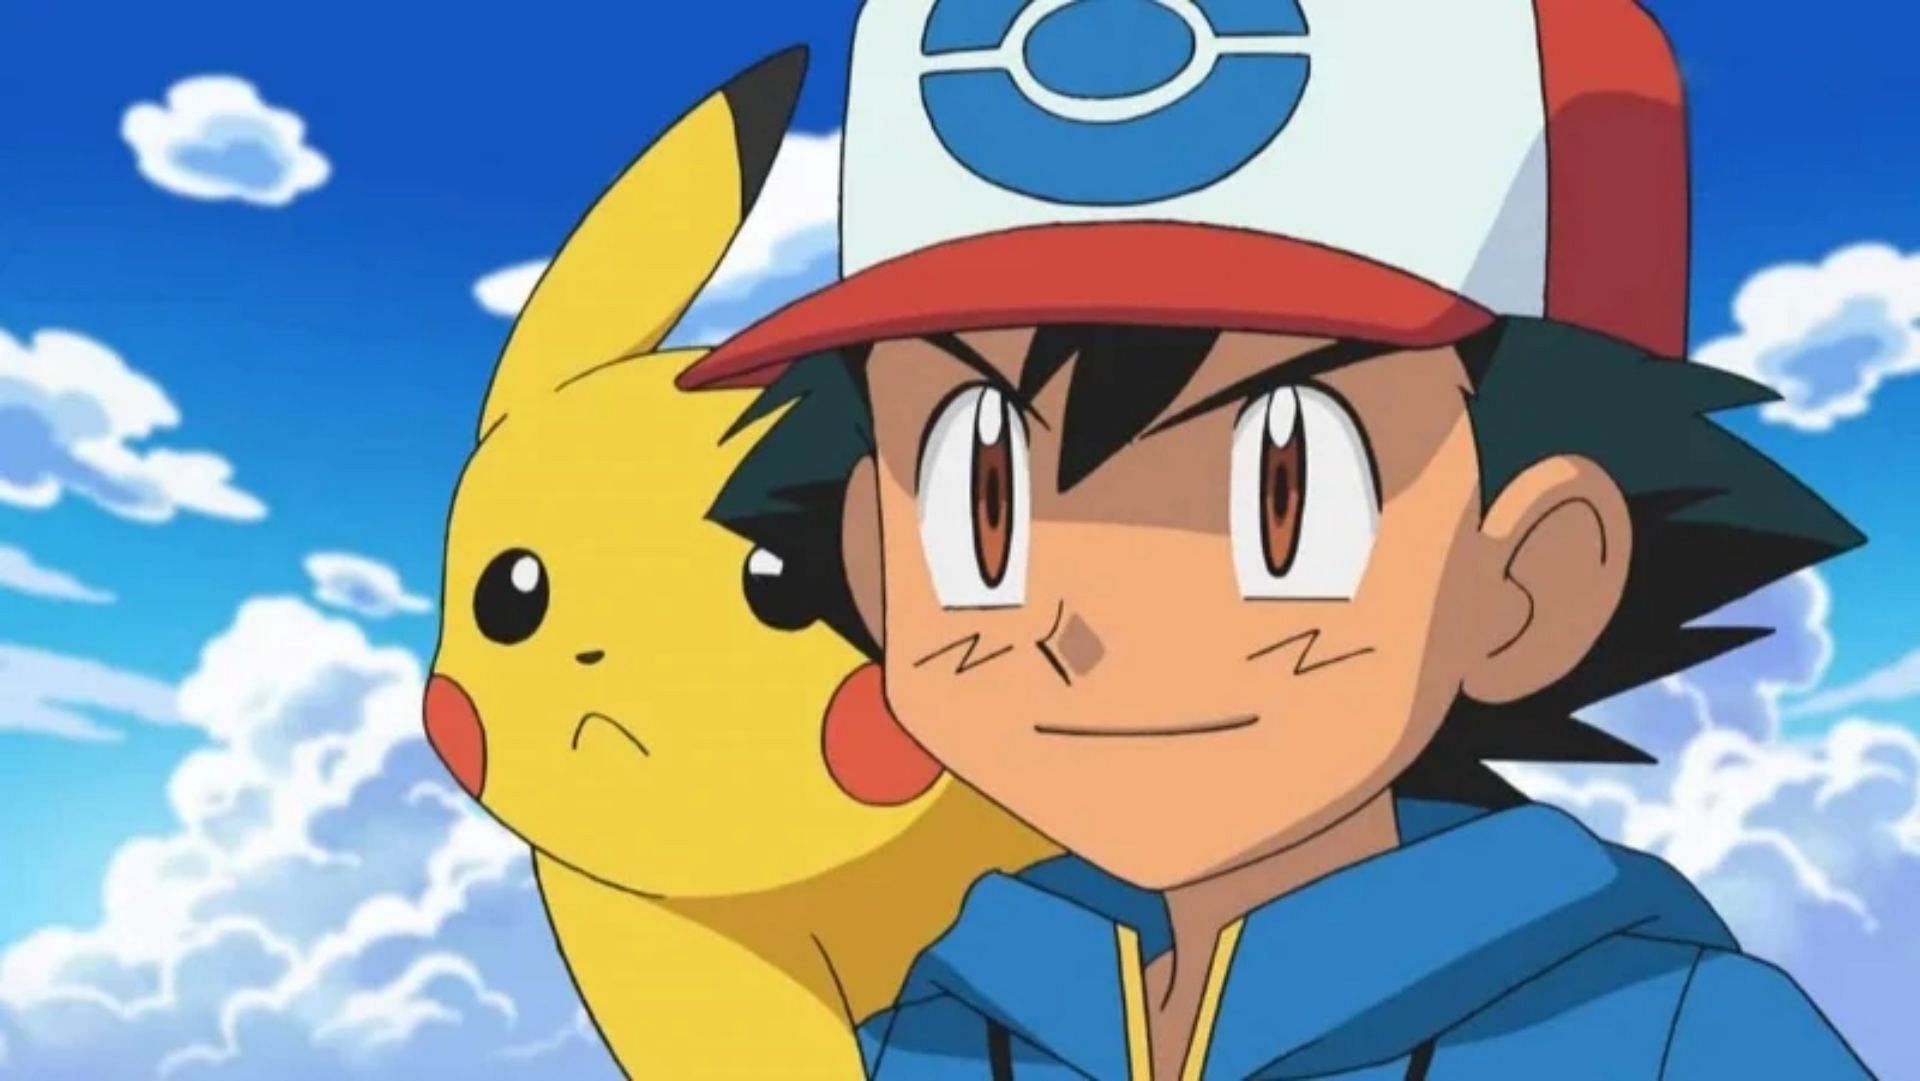 Ash Ketchum with his Pikachu as seen in the anime (Image via OLM/Viz Media)